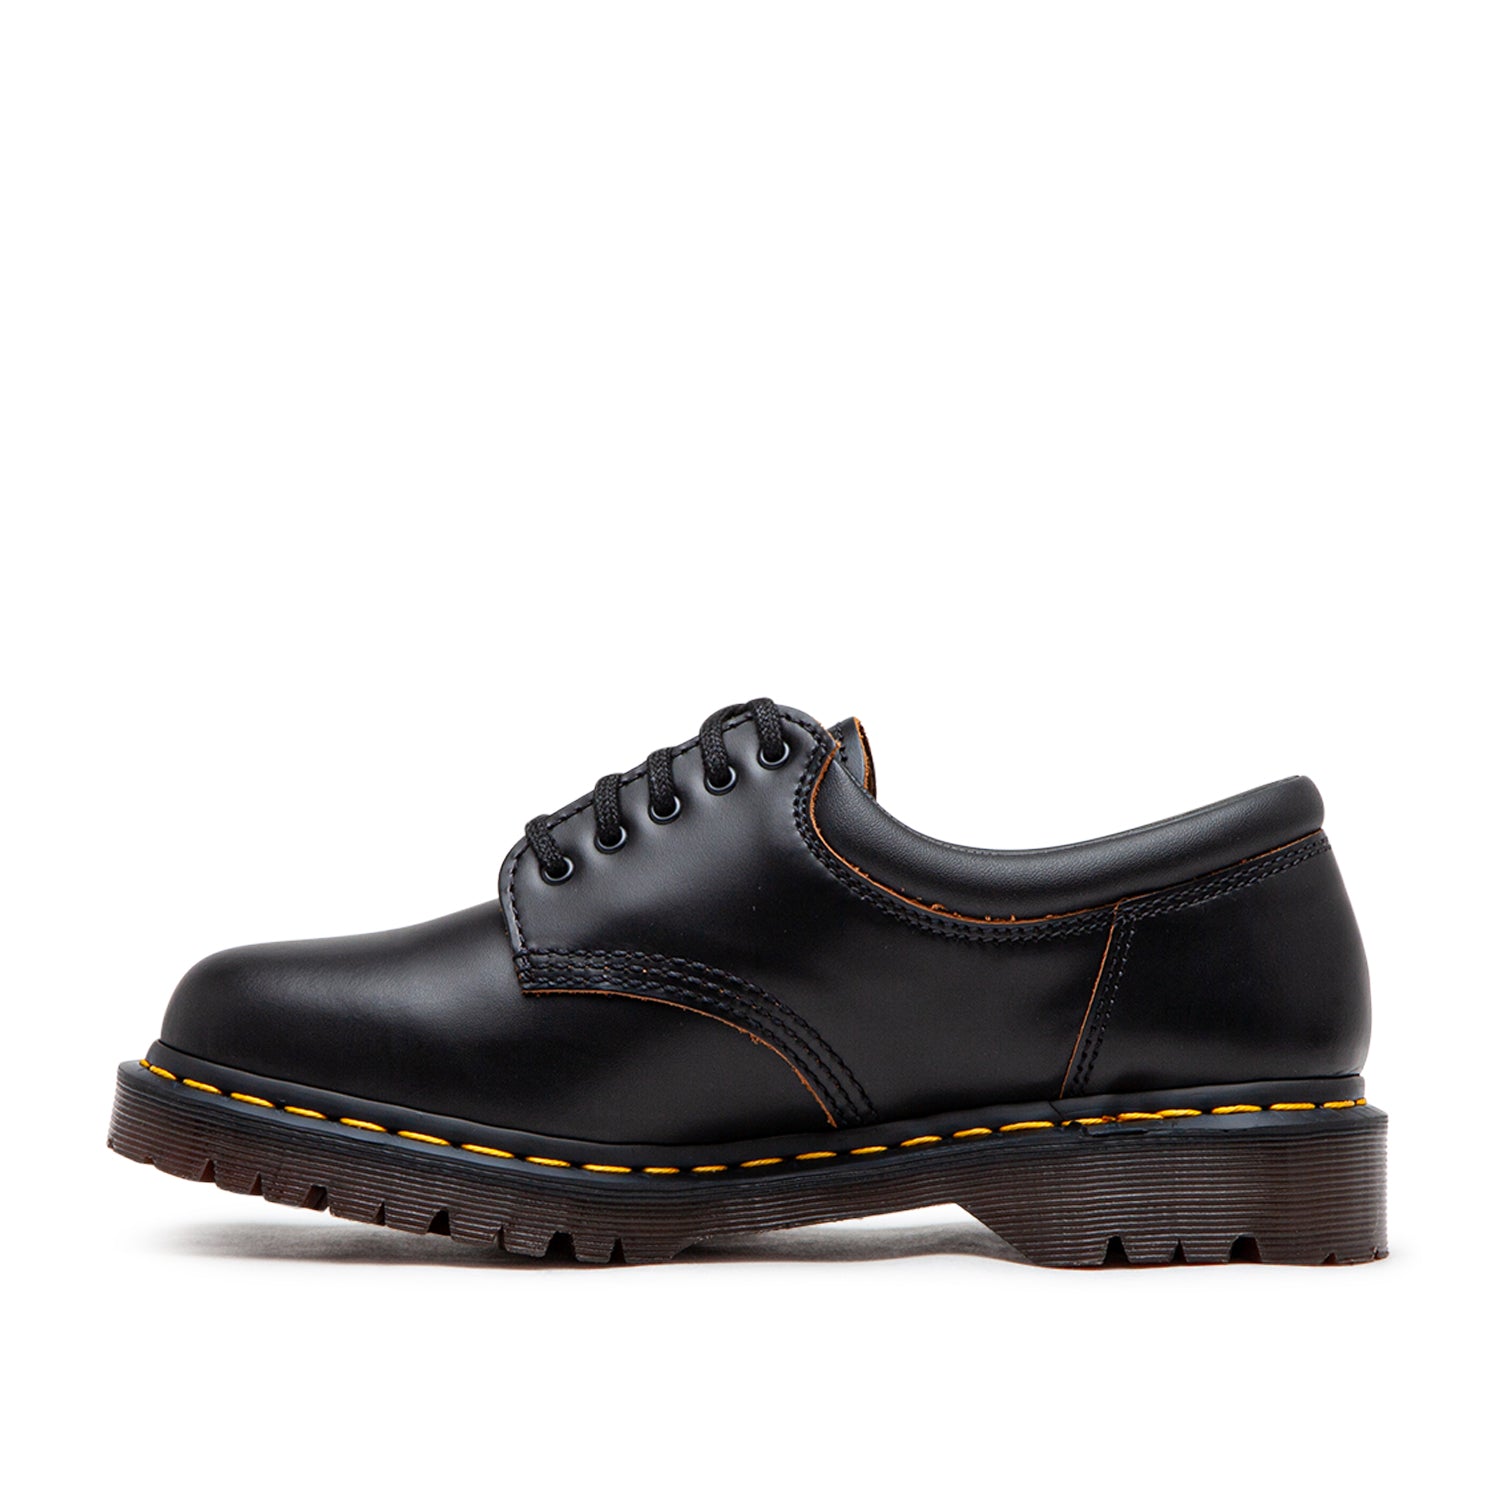 Dr. Martens 8053 Vintage Smooth Leather Oxford Shoes (Schwarz)  - Cheap Juzsports Jordan Outlet